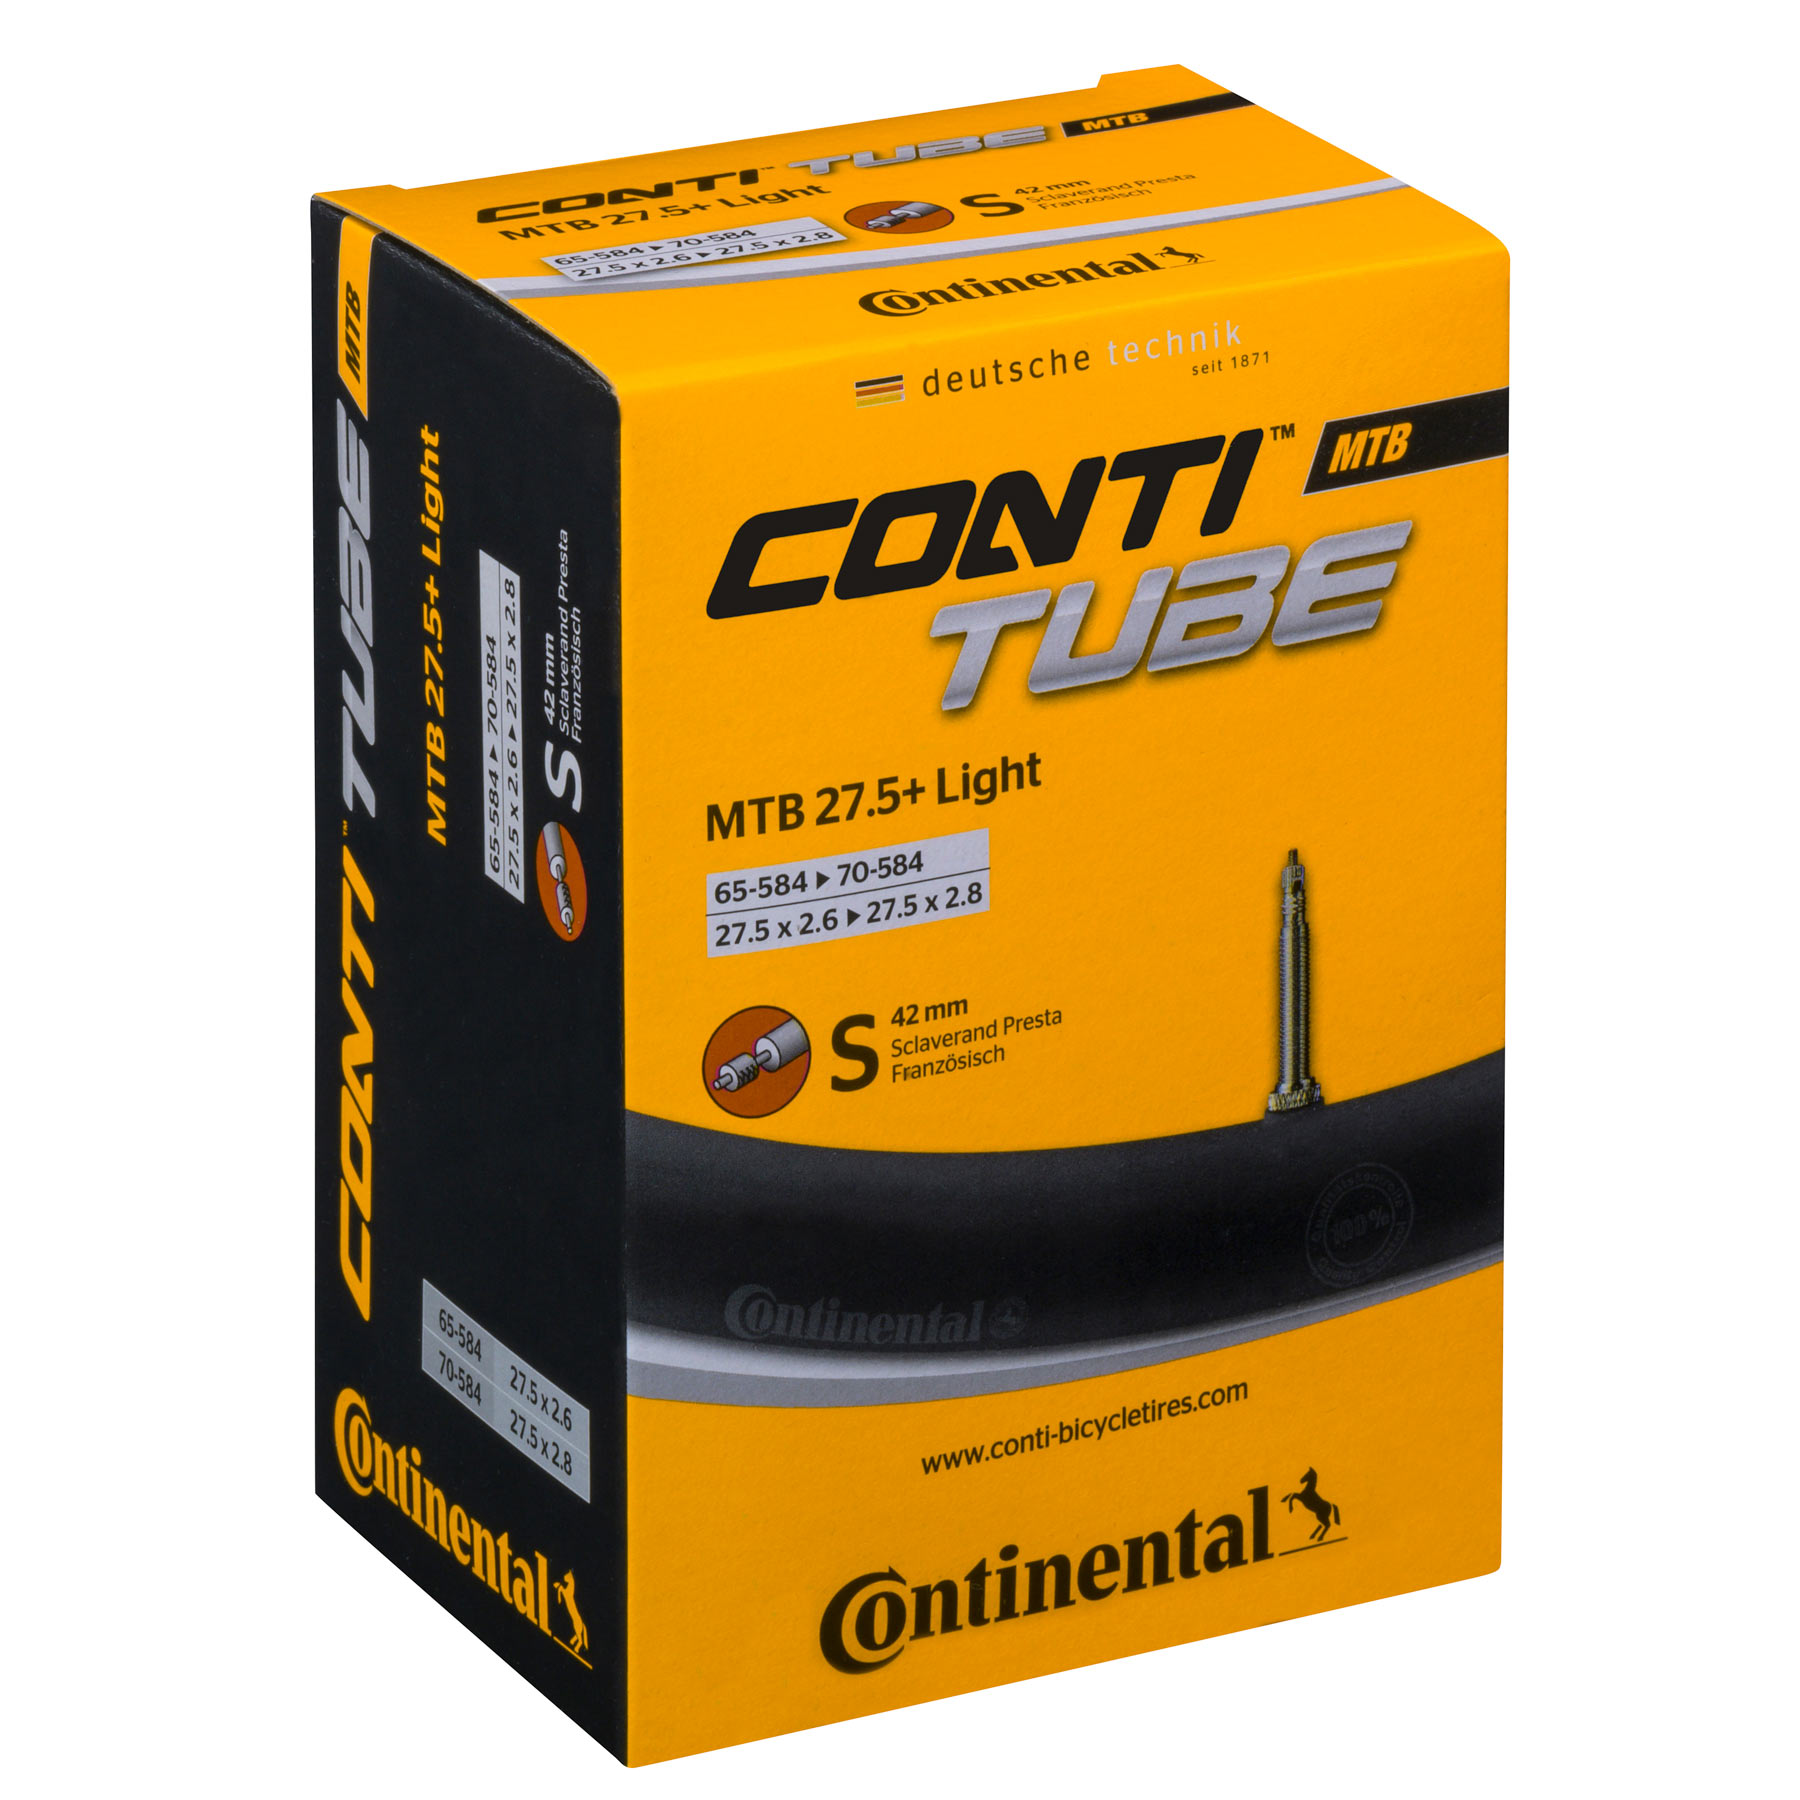 Productfoto van Continental MTB 27.5+ Tube